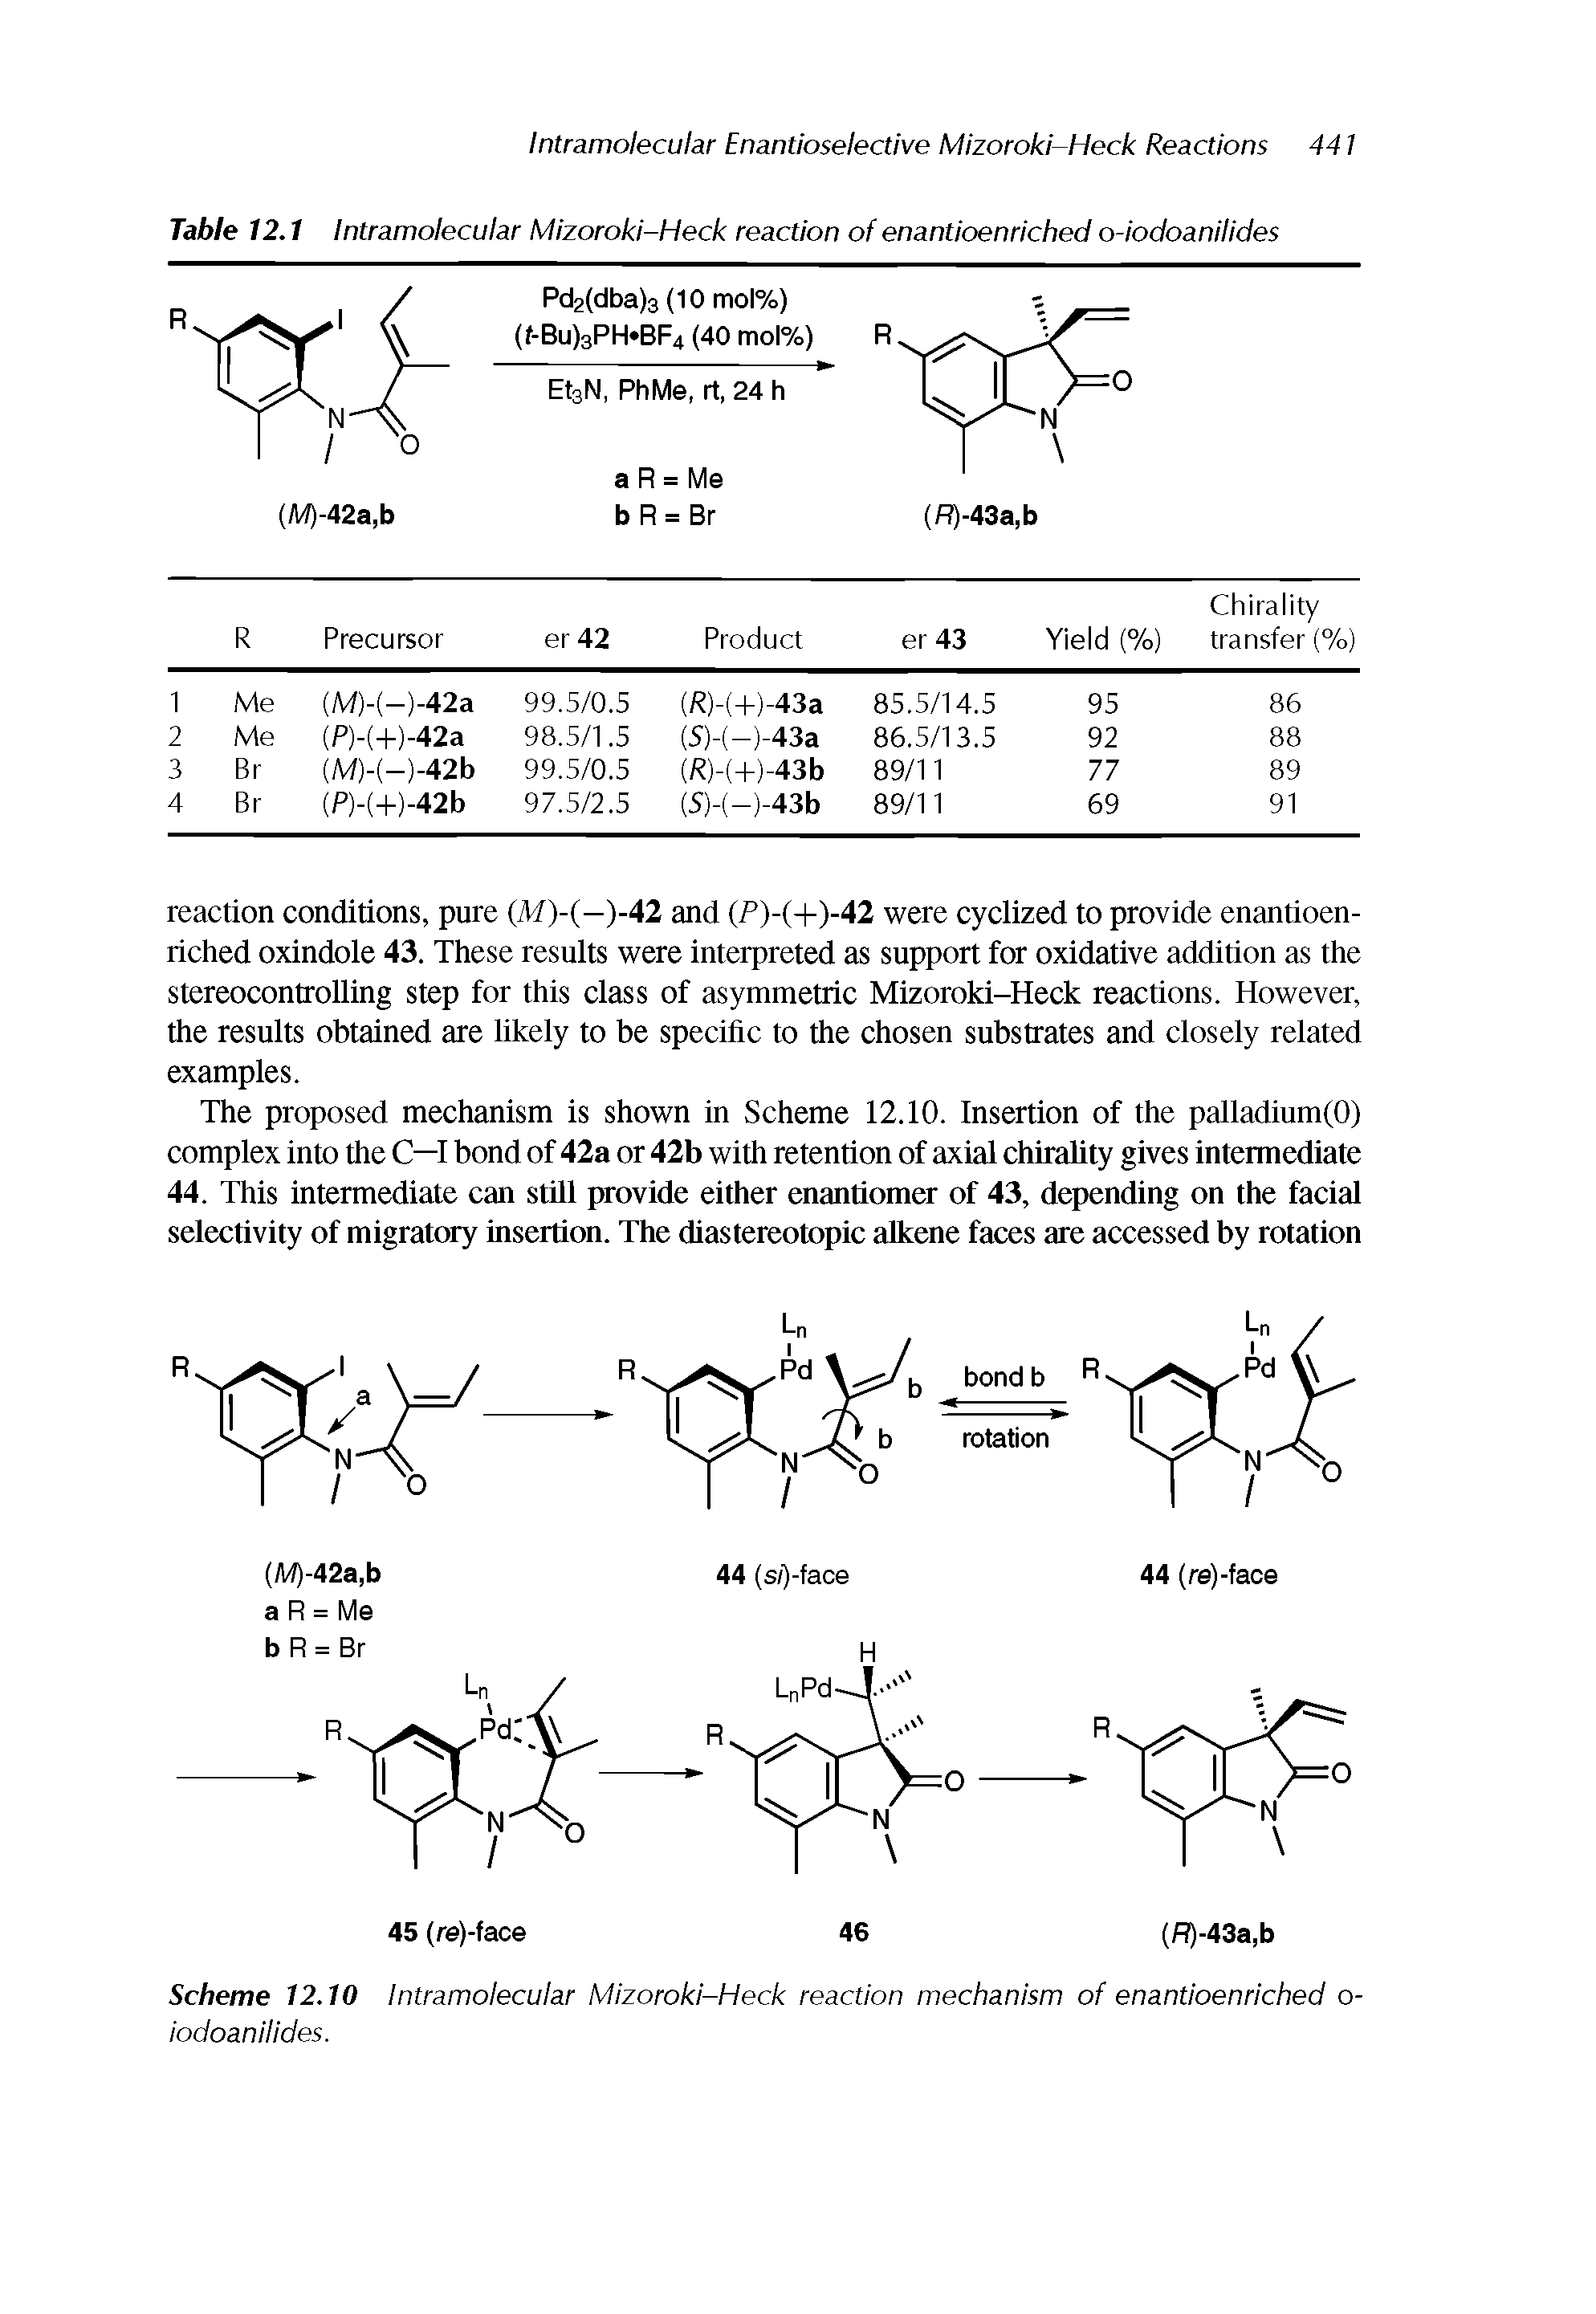 Scheme 12.10 Intramolecular Mizoroki-Heck reaction mechanism of enantioenriched o-iodoanilides.